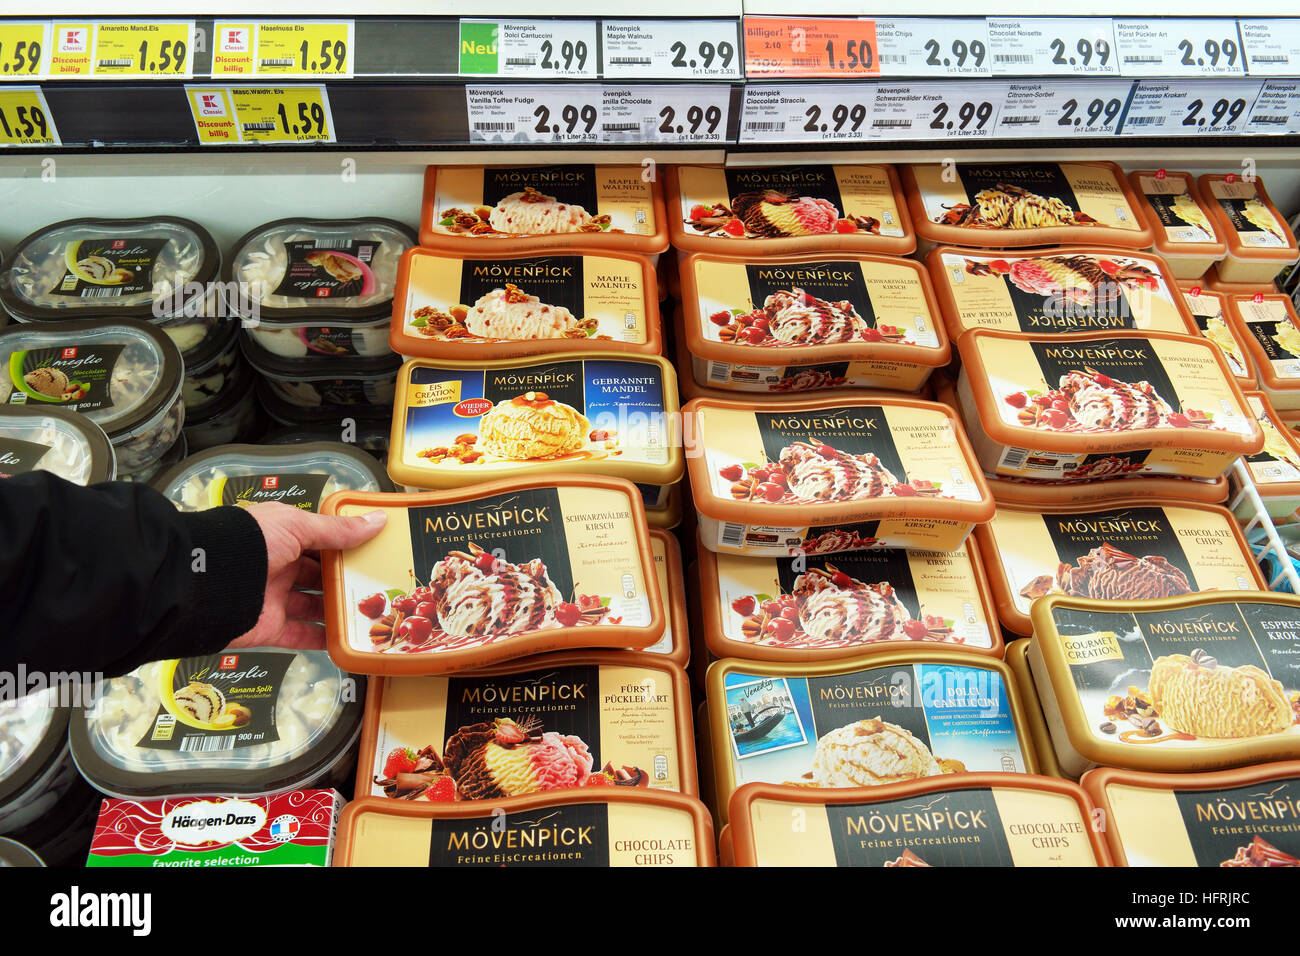 Movenpick Ice Cream in Supermarket Stock Photo